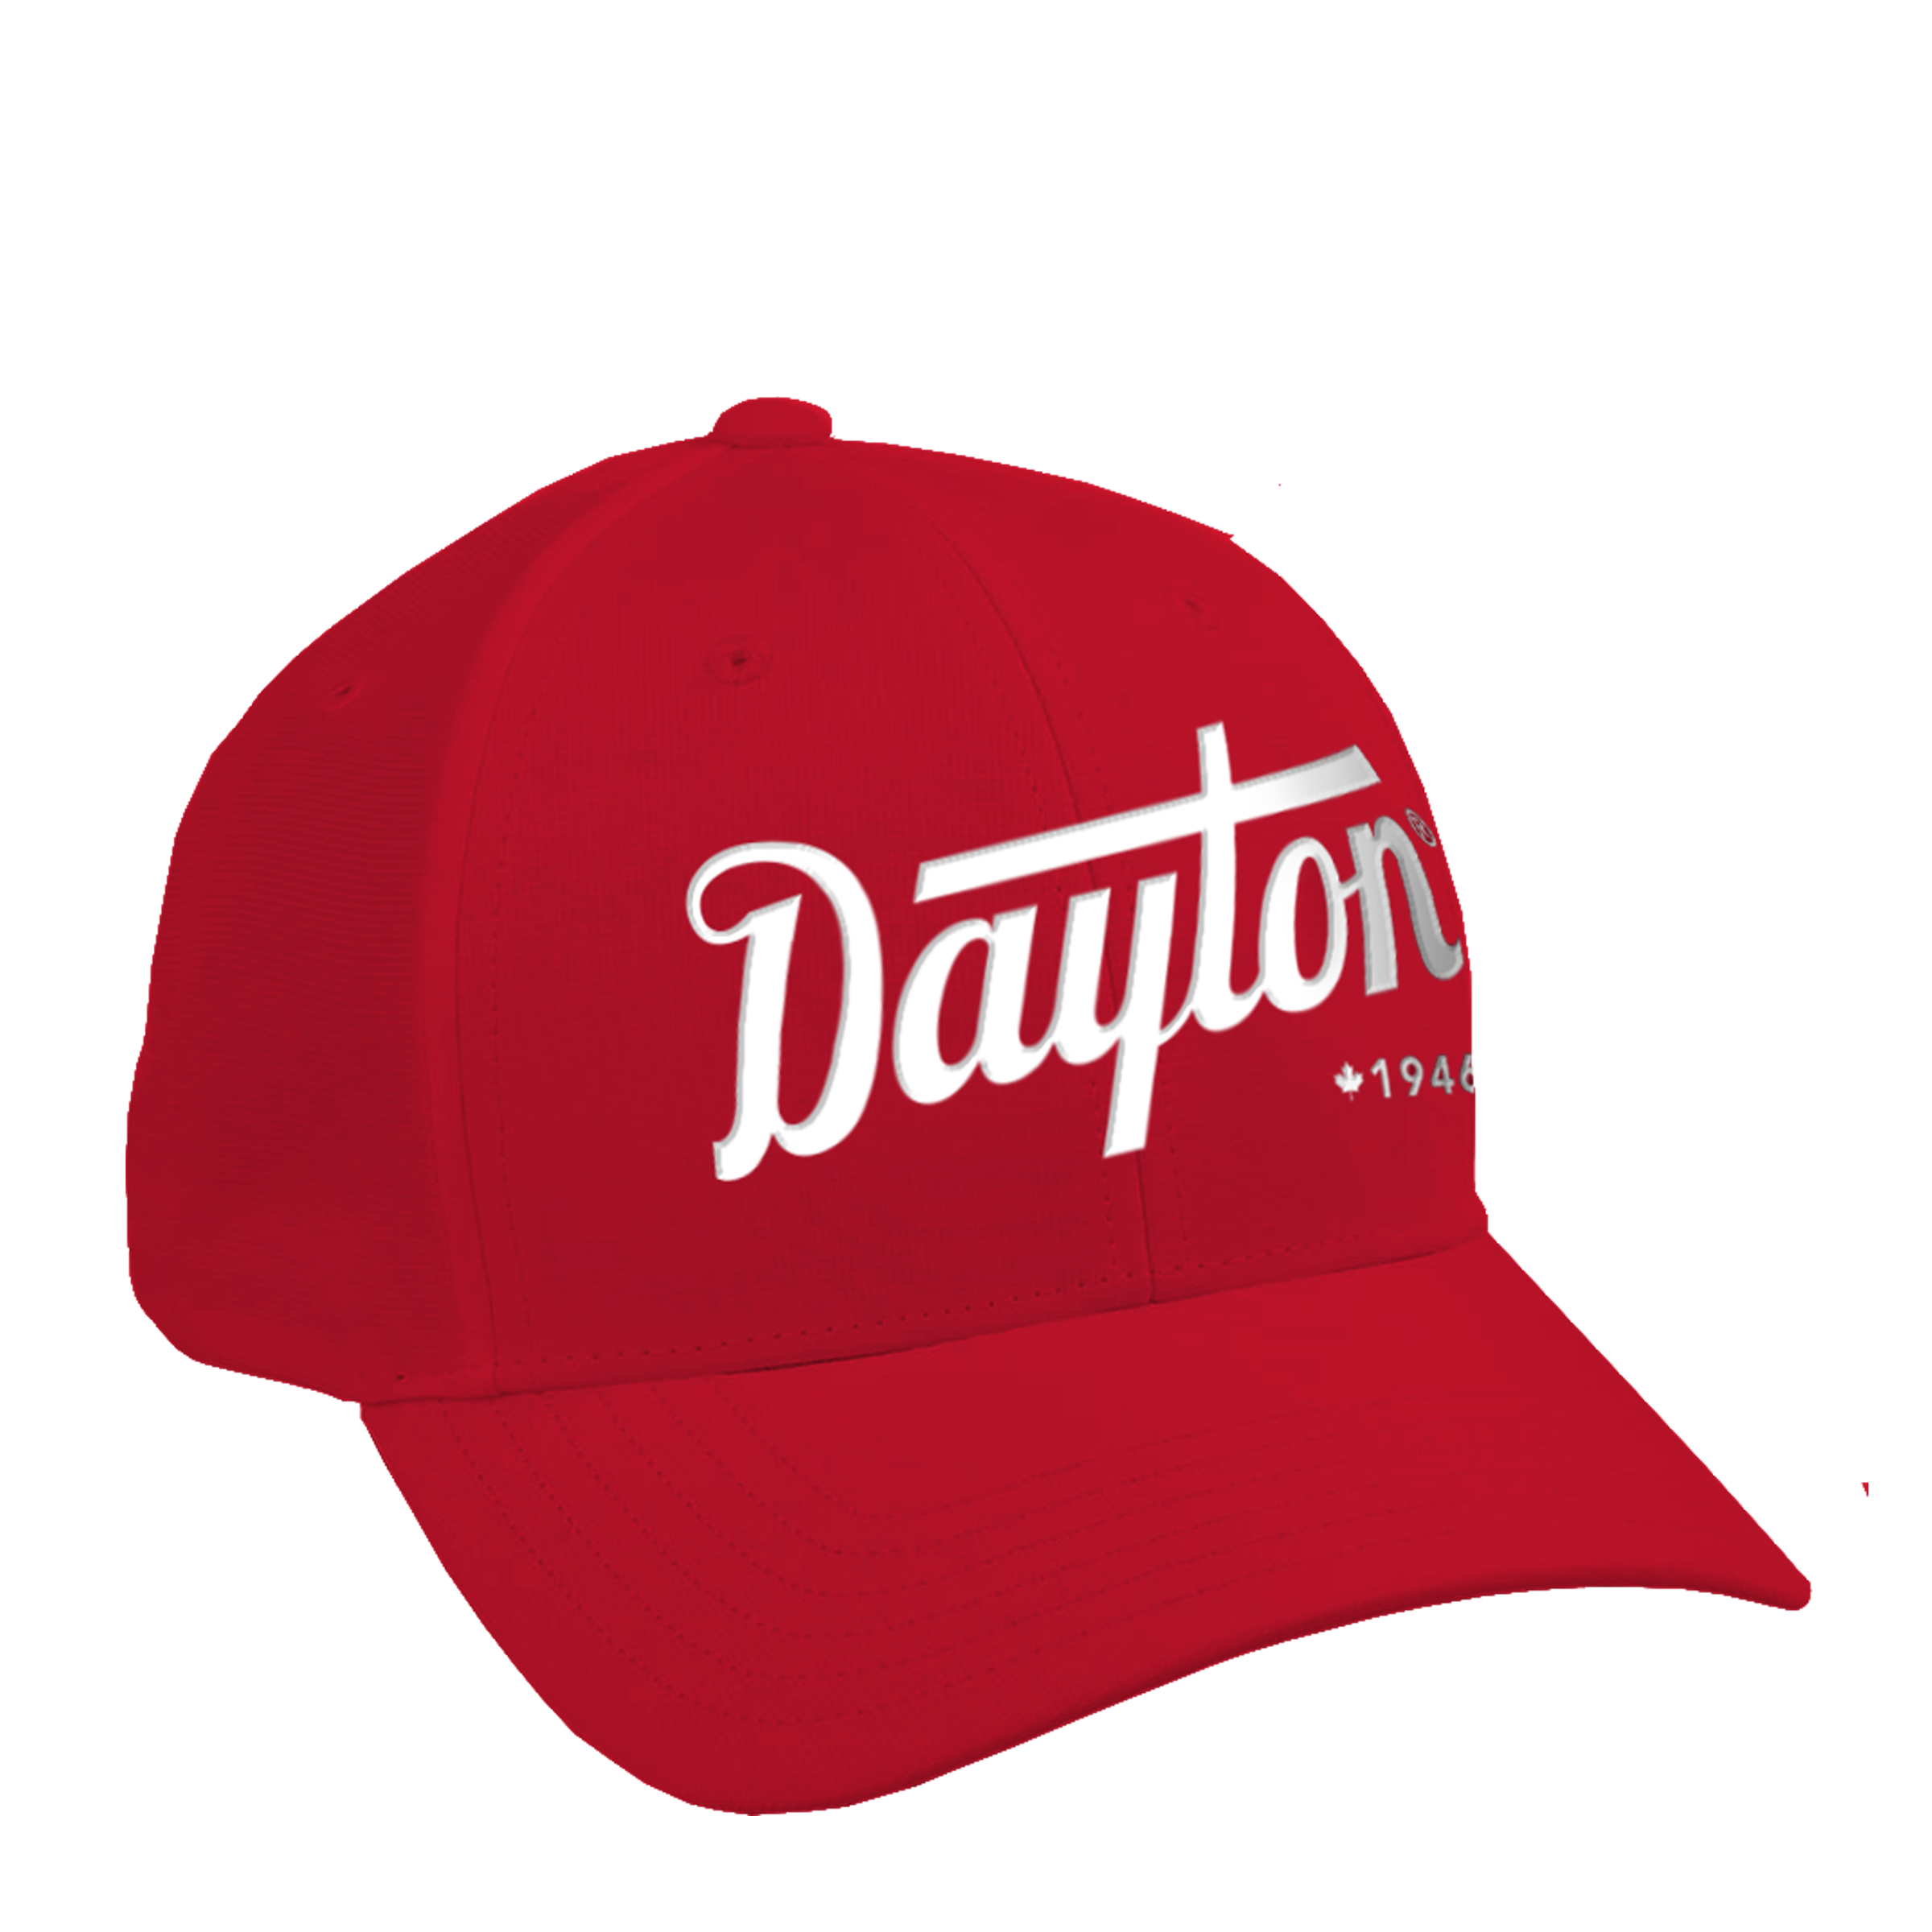 Dayton Script Fitted Cap